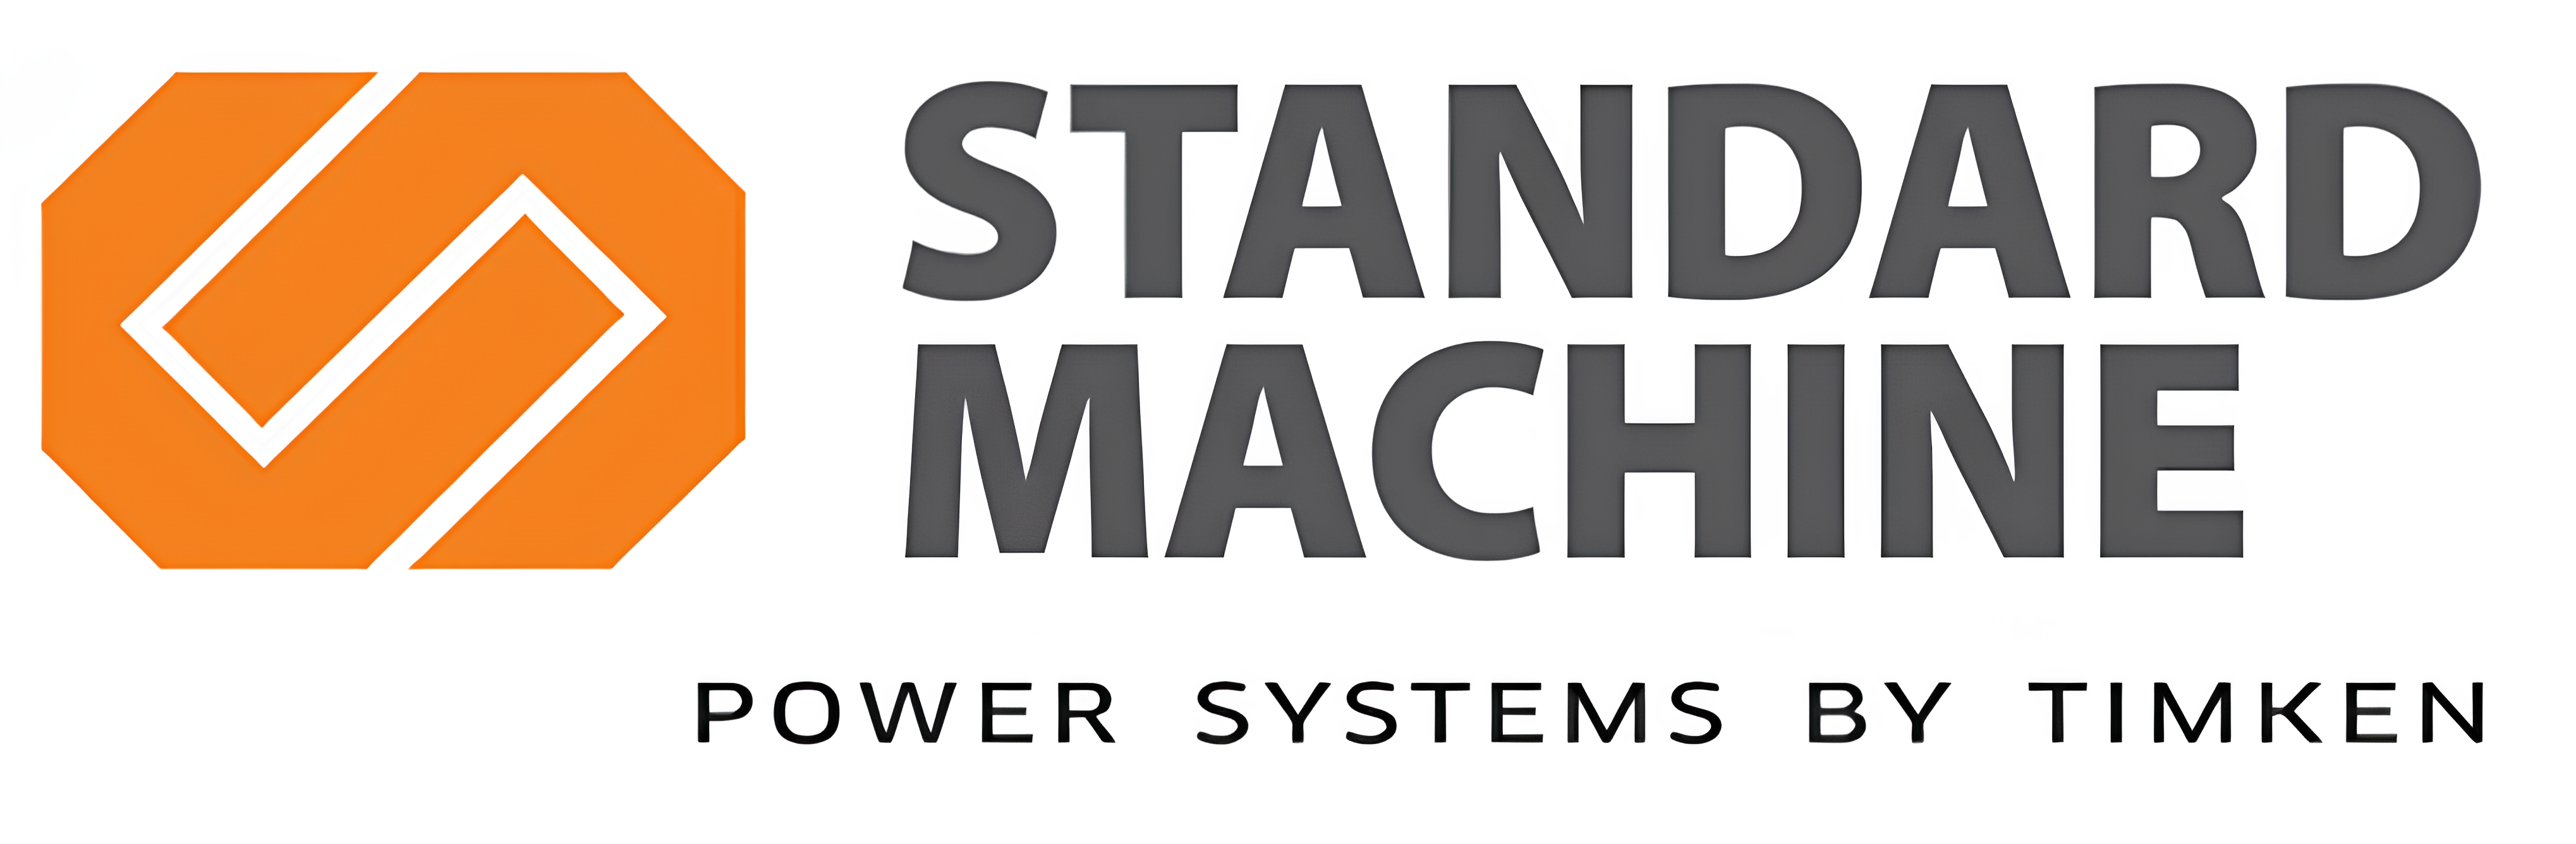 Standard Machine